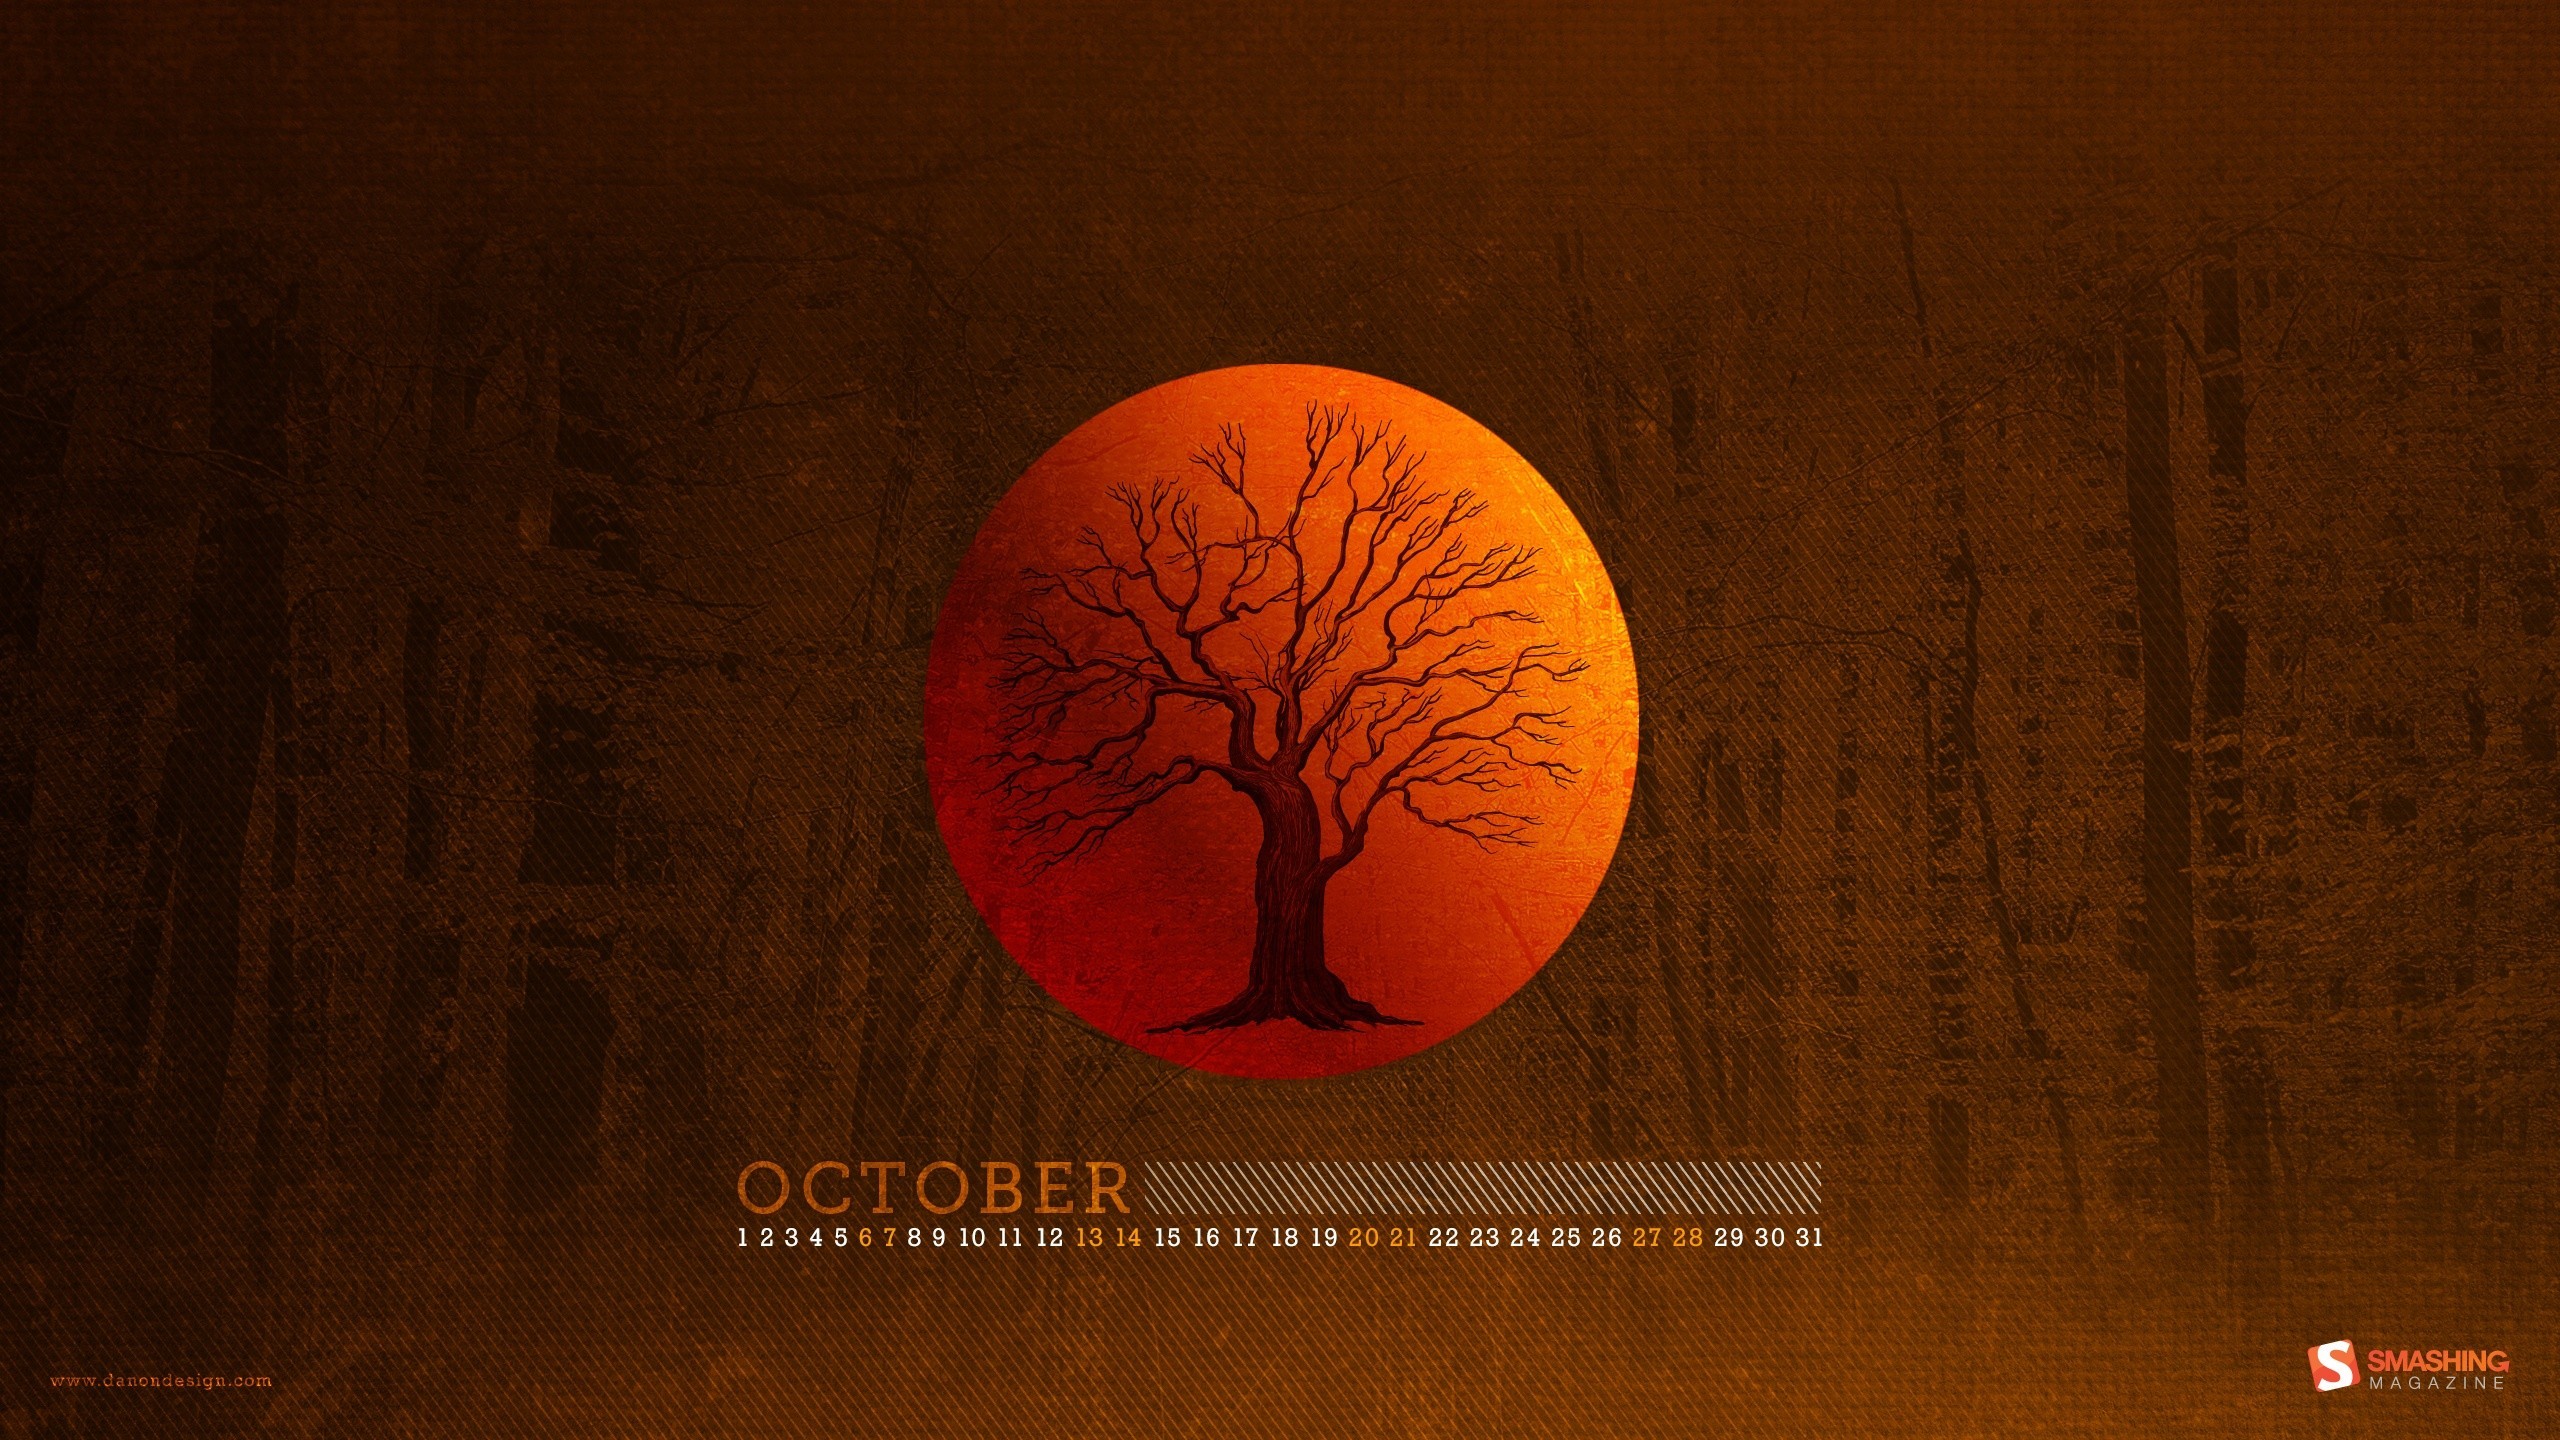 General 2560x1440 October calendar Smashing Magazine numbers digital art watermarked minimalism simple background trees branch